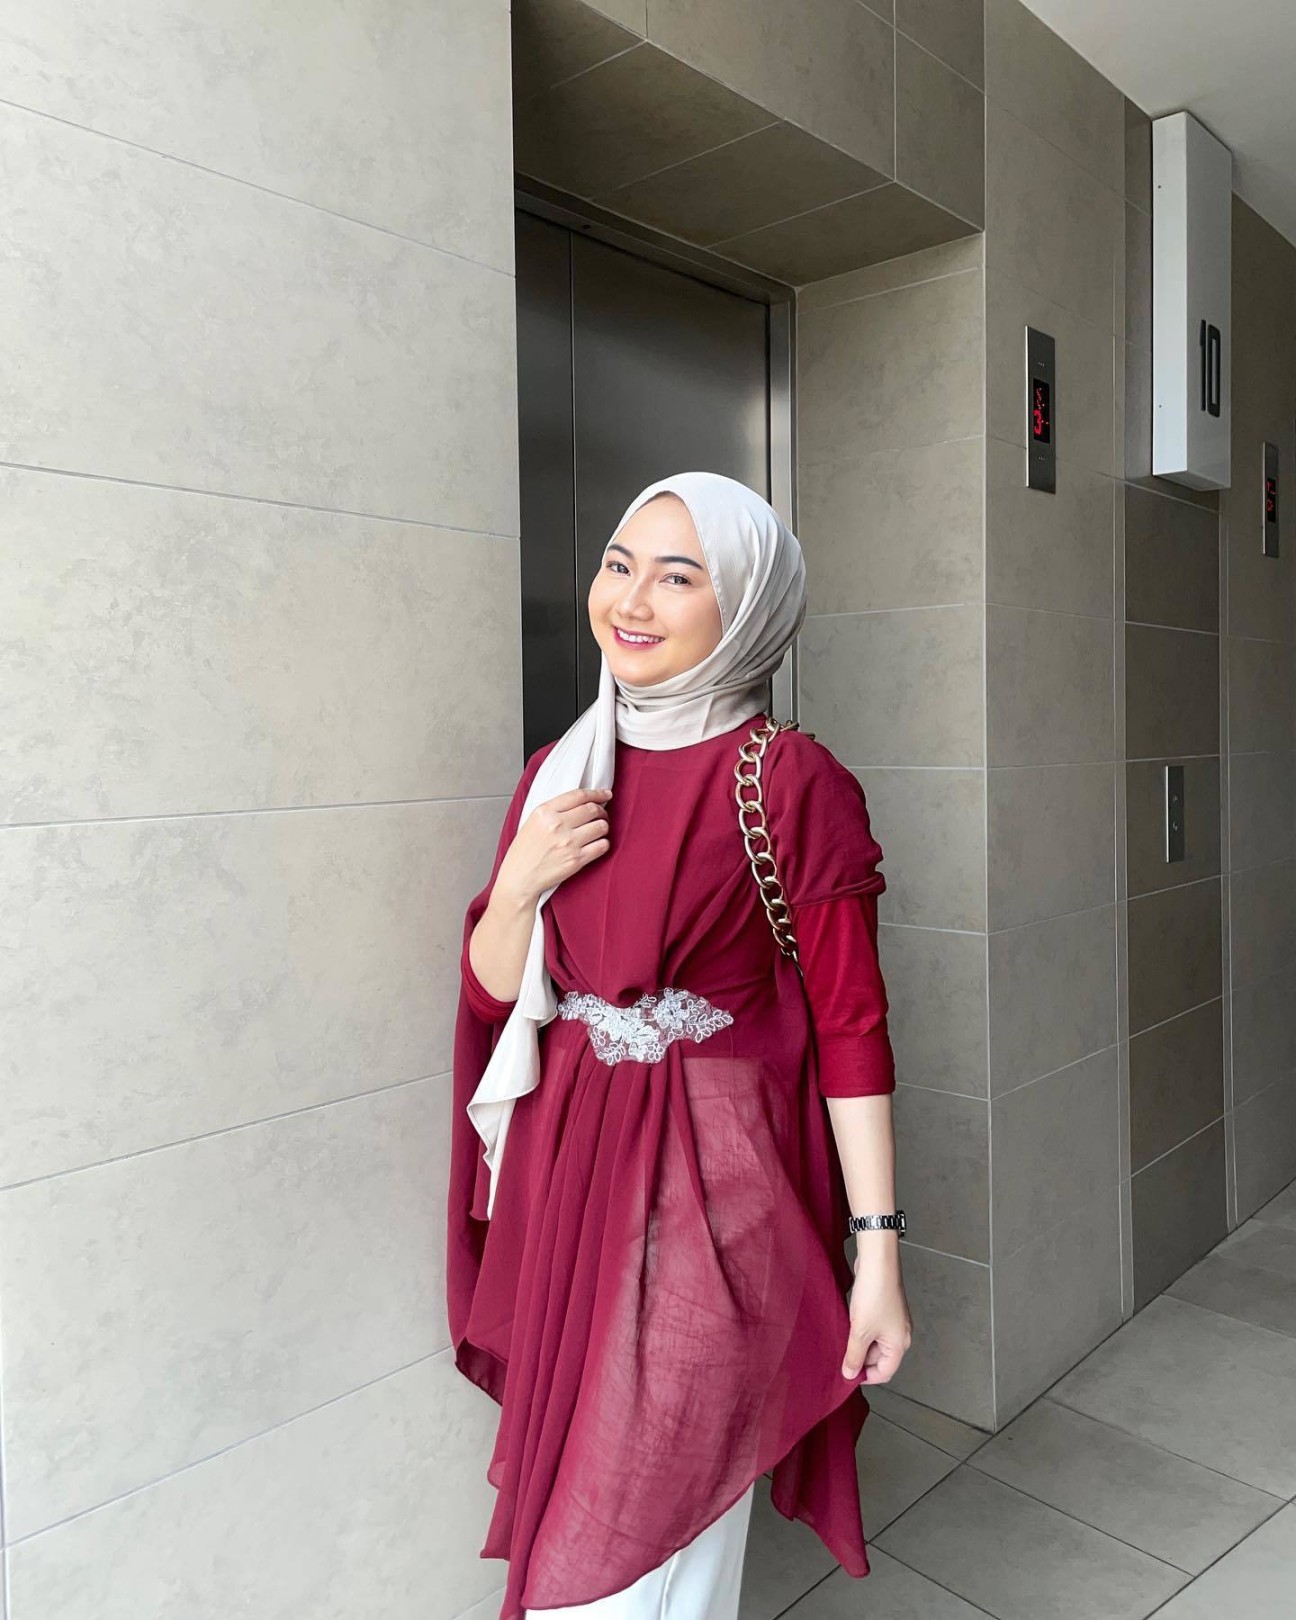 Warna Jilbab yang Cocok untuk Baju Warna Maroon  All Things